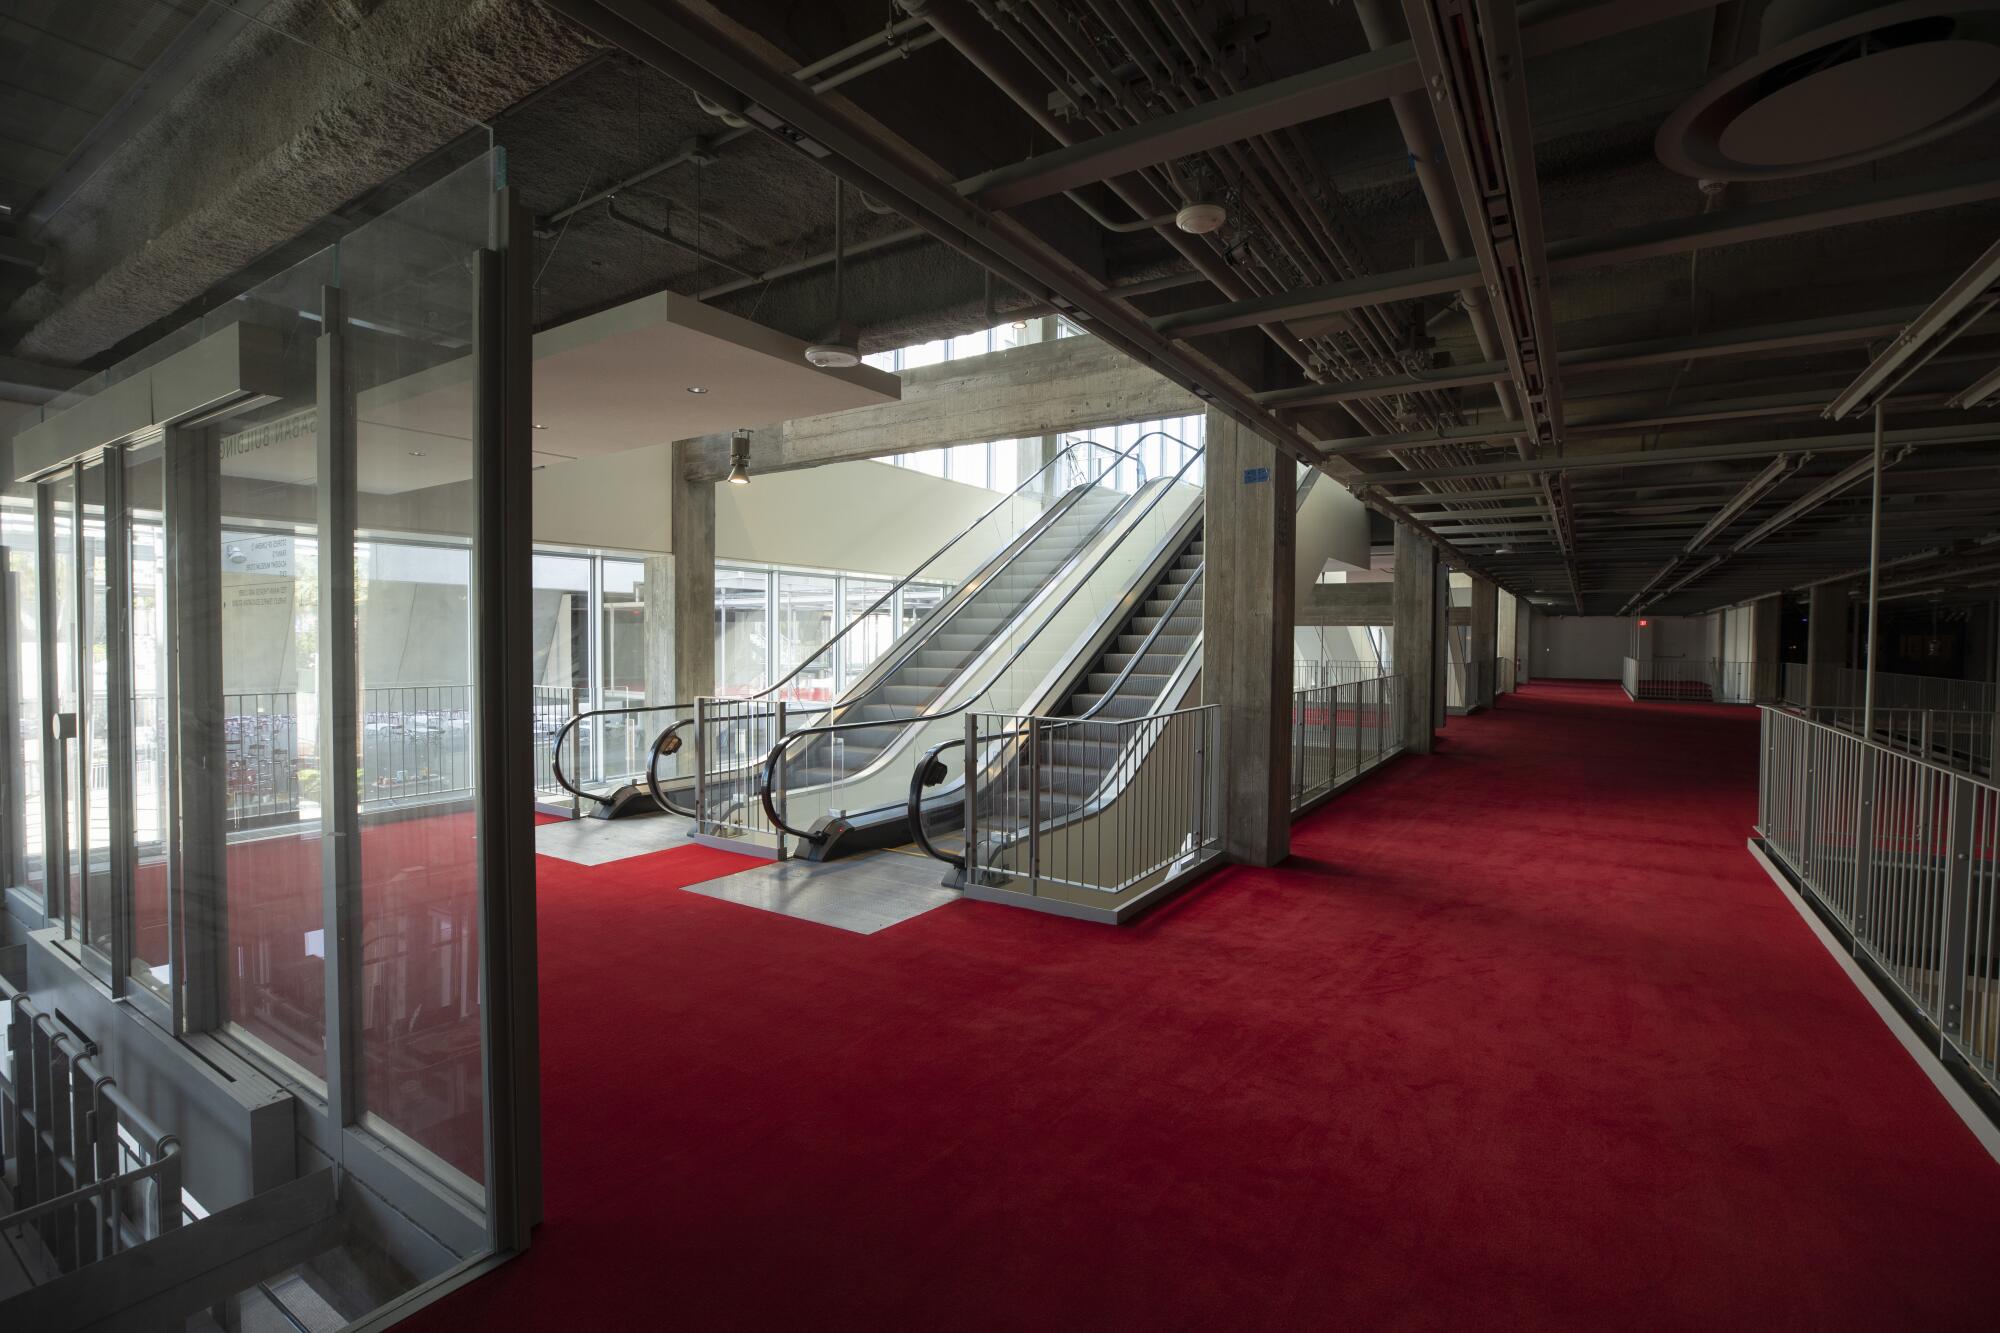 Escalators descend to a mezzanine area that is covered in bright red carpet